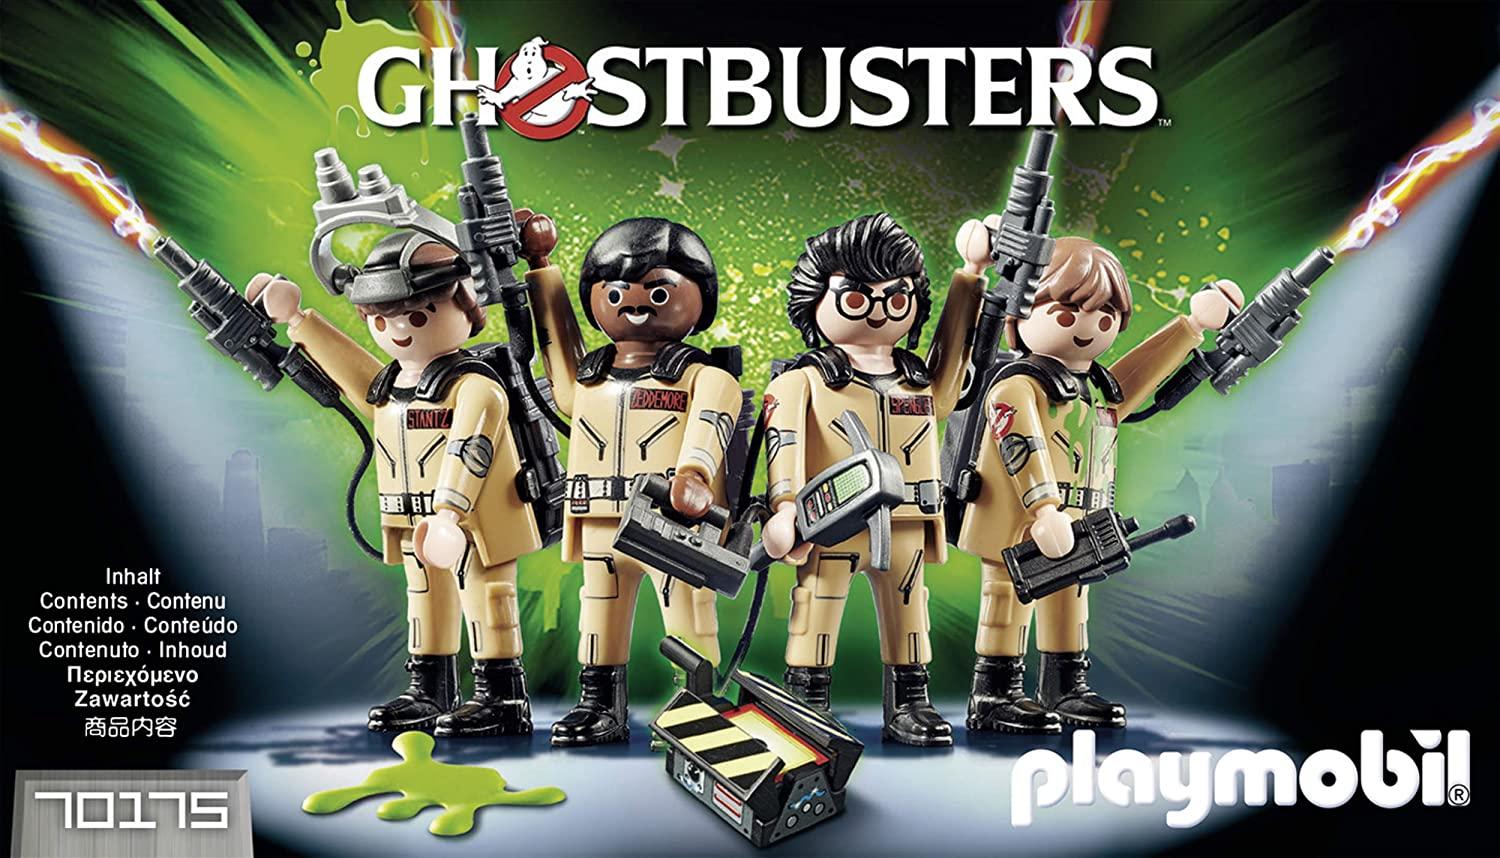 PLAYMOBIL Ghostbusters 4 Pack Figure Set